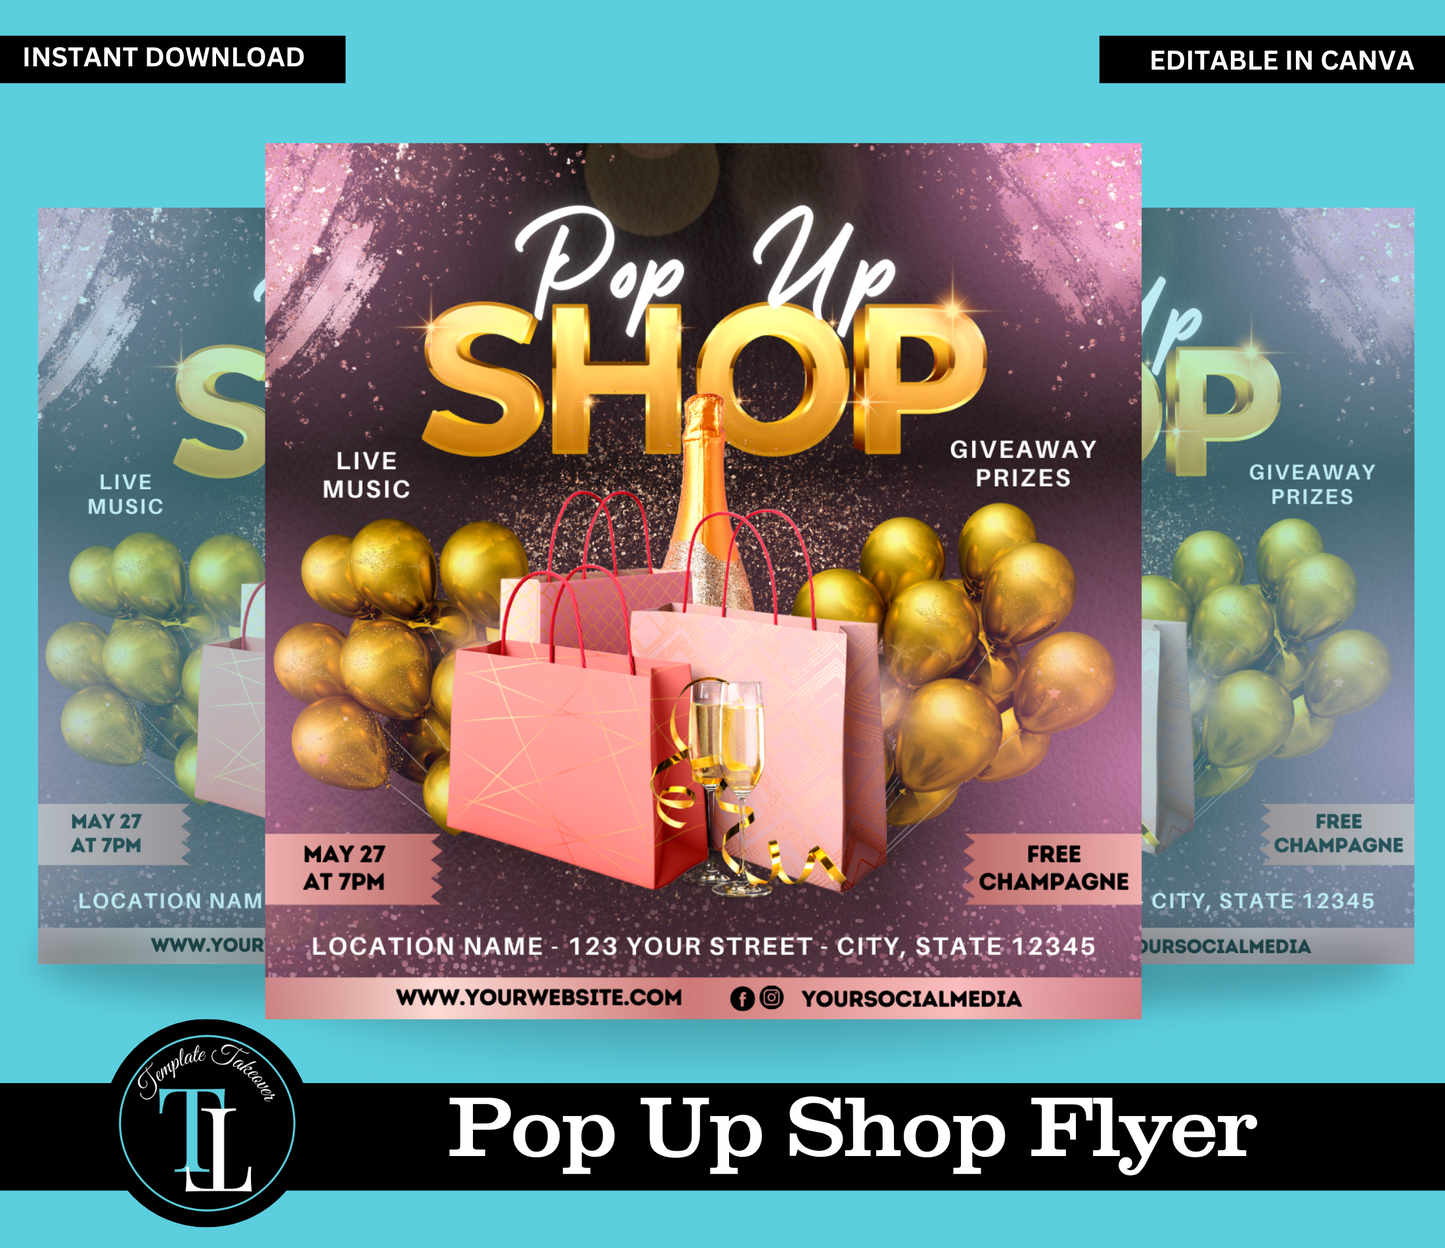 Editable Pop Up Shop Flyer | Editable, Shareable, Printable Invite, Le ...